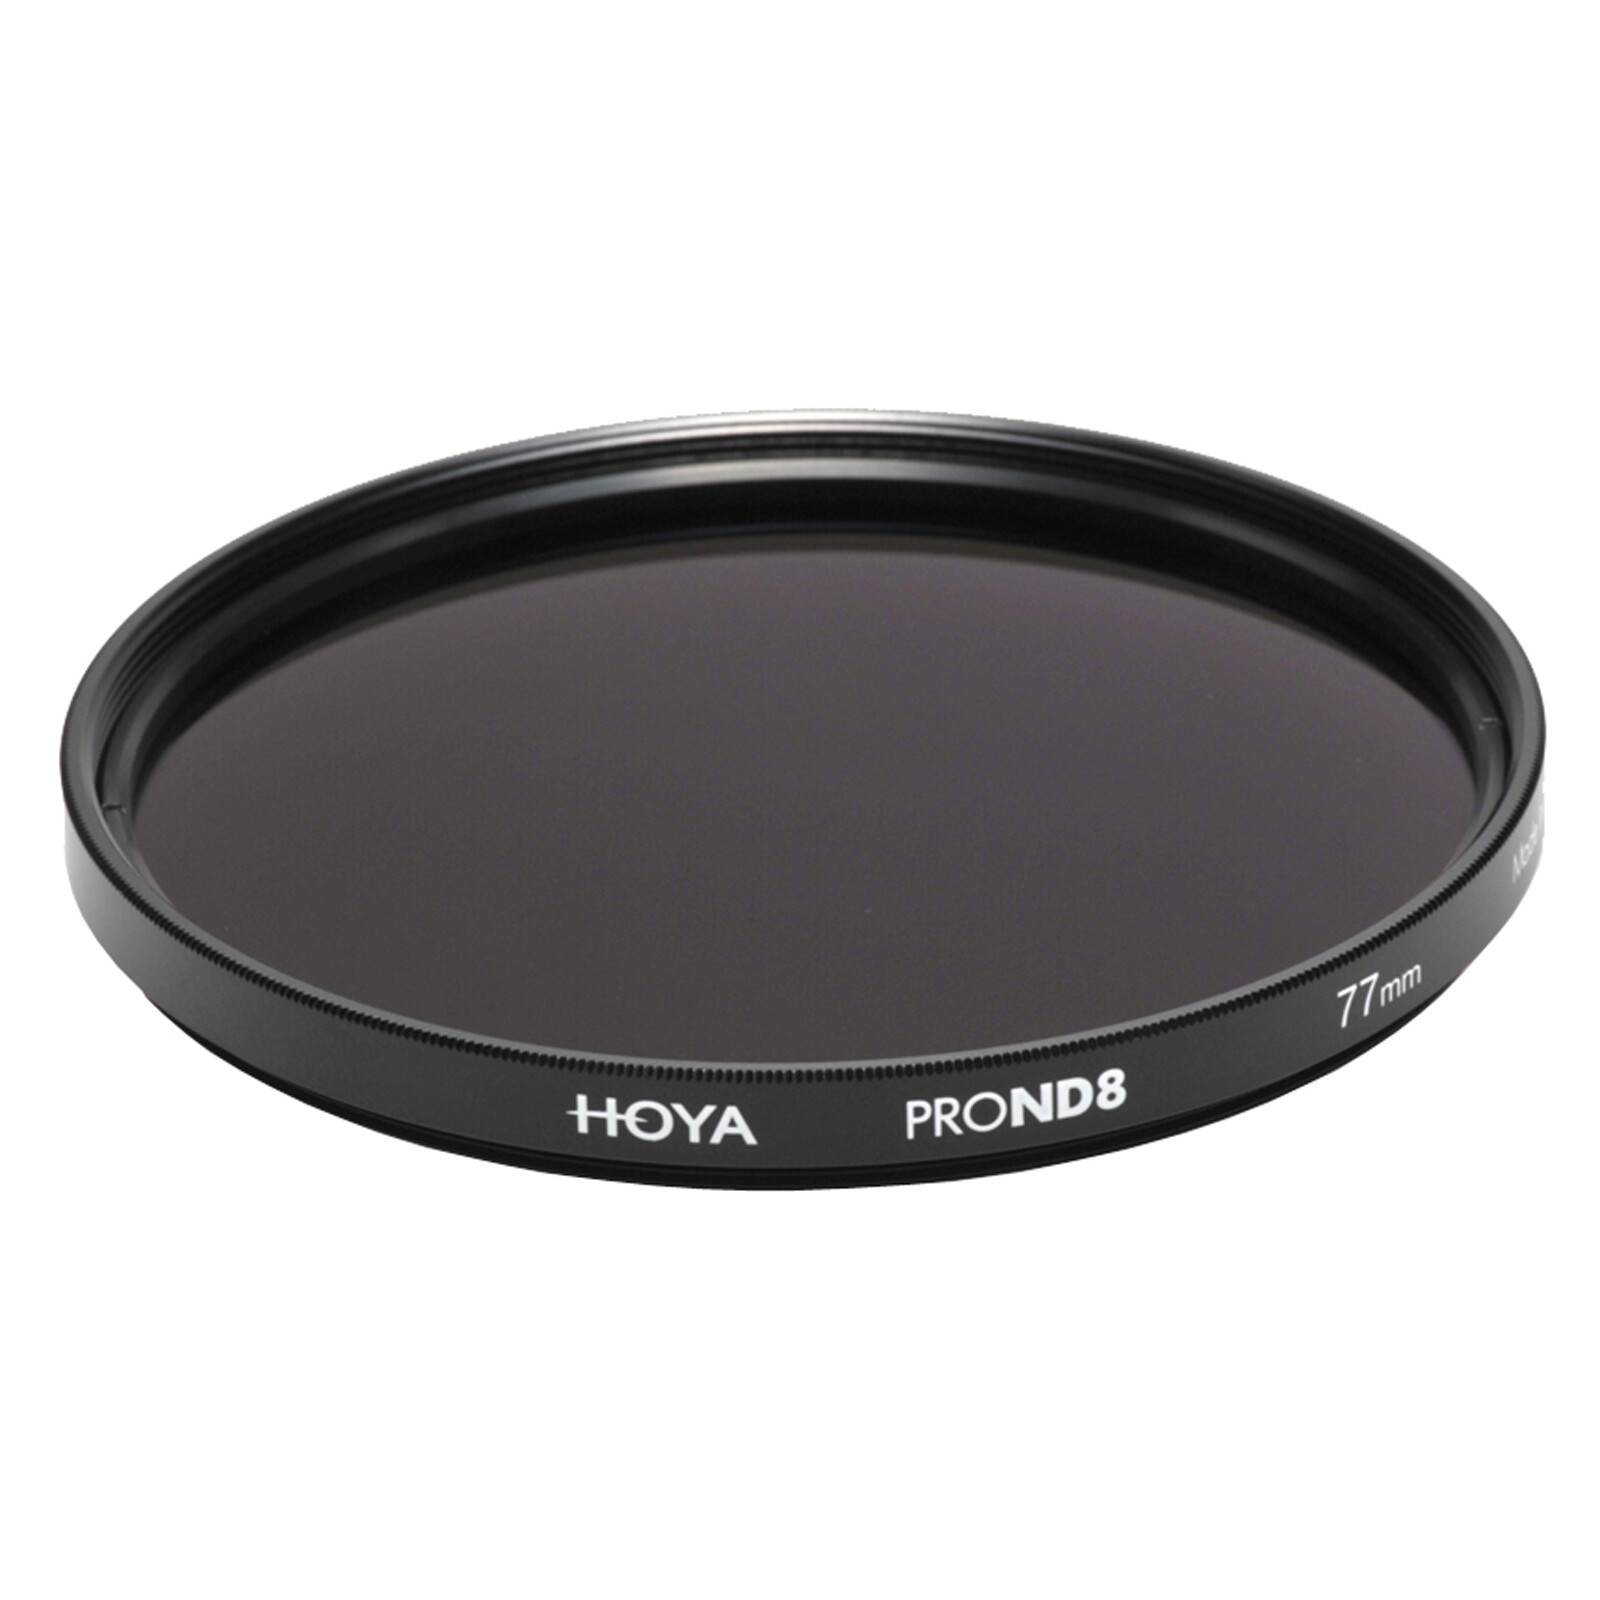 Hoya Grau PRO ND 8 77mm